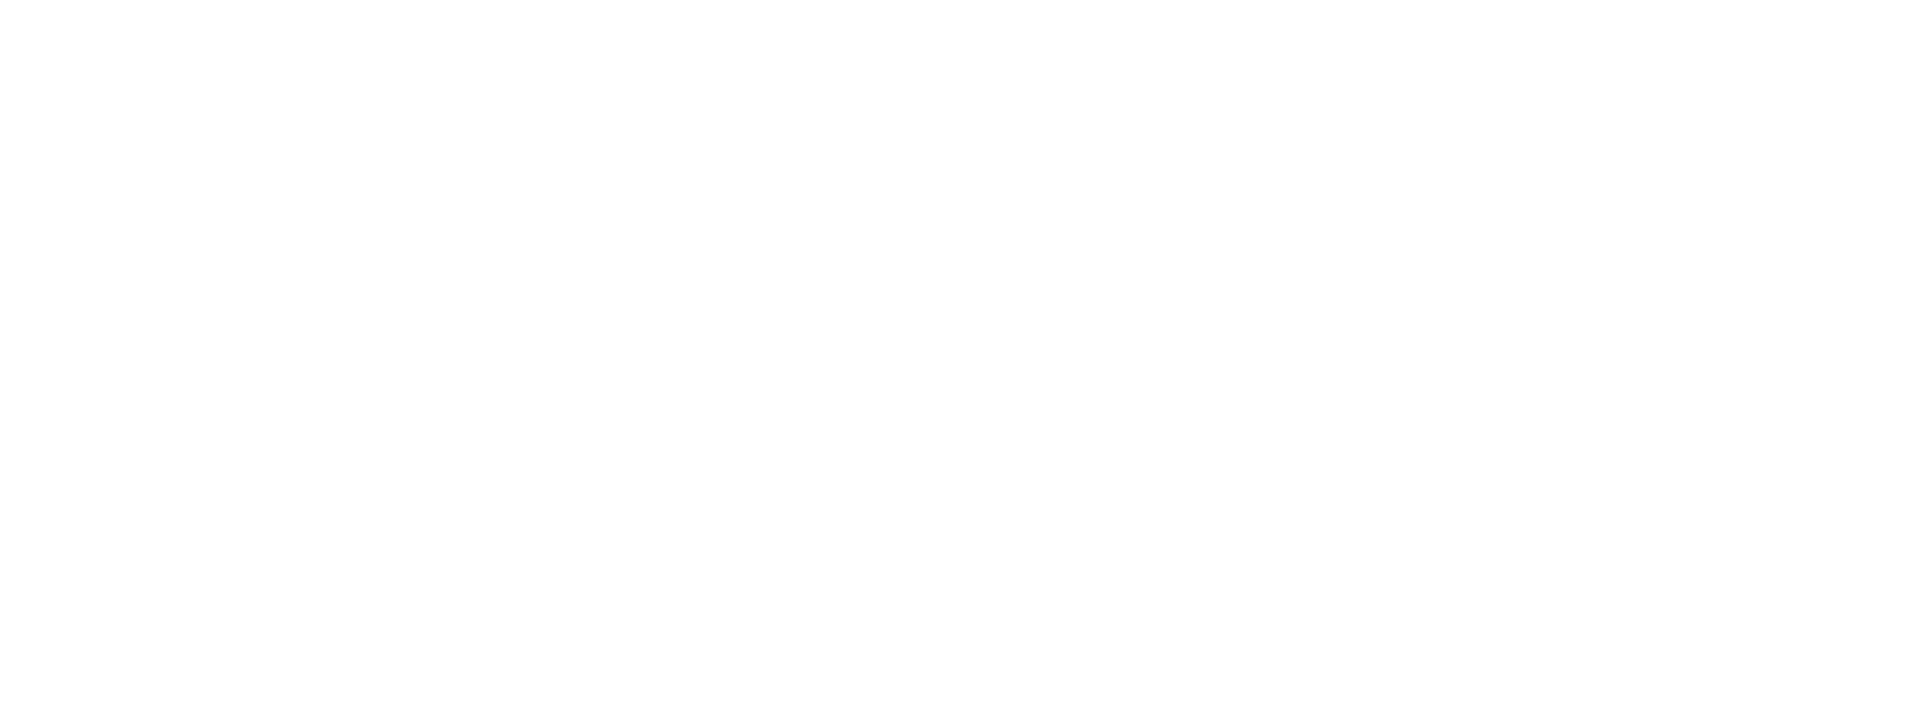 Association of Christian Schools International logo